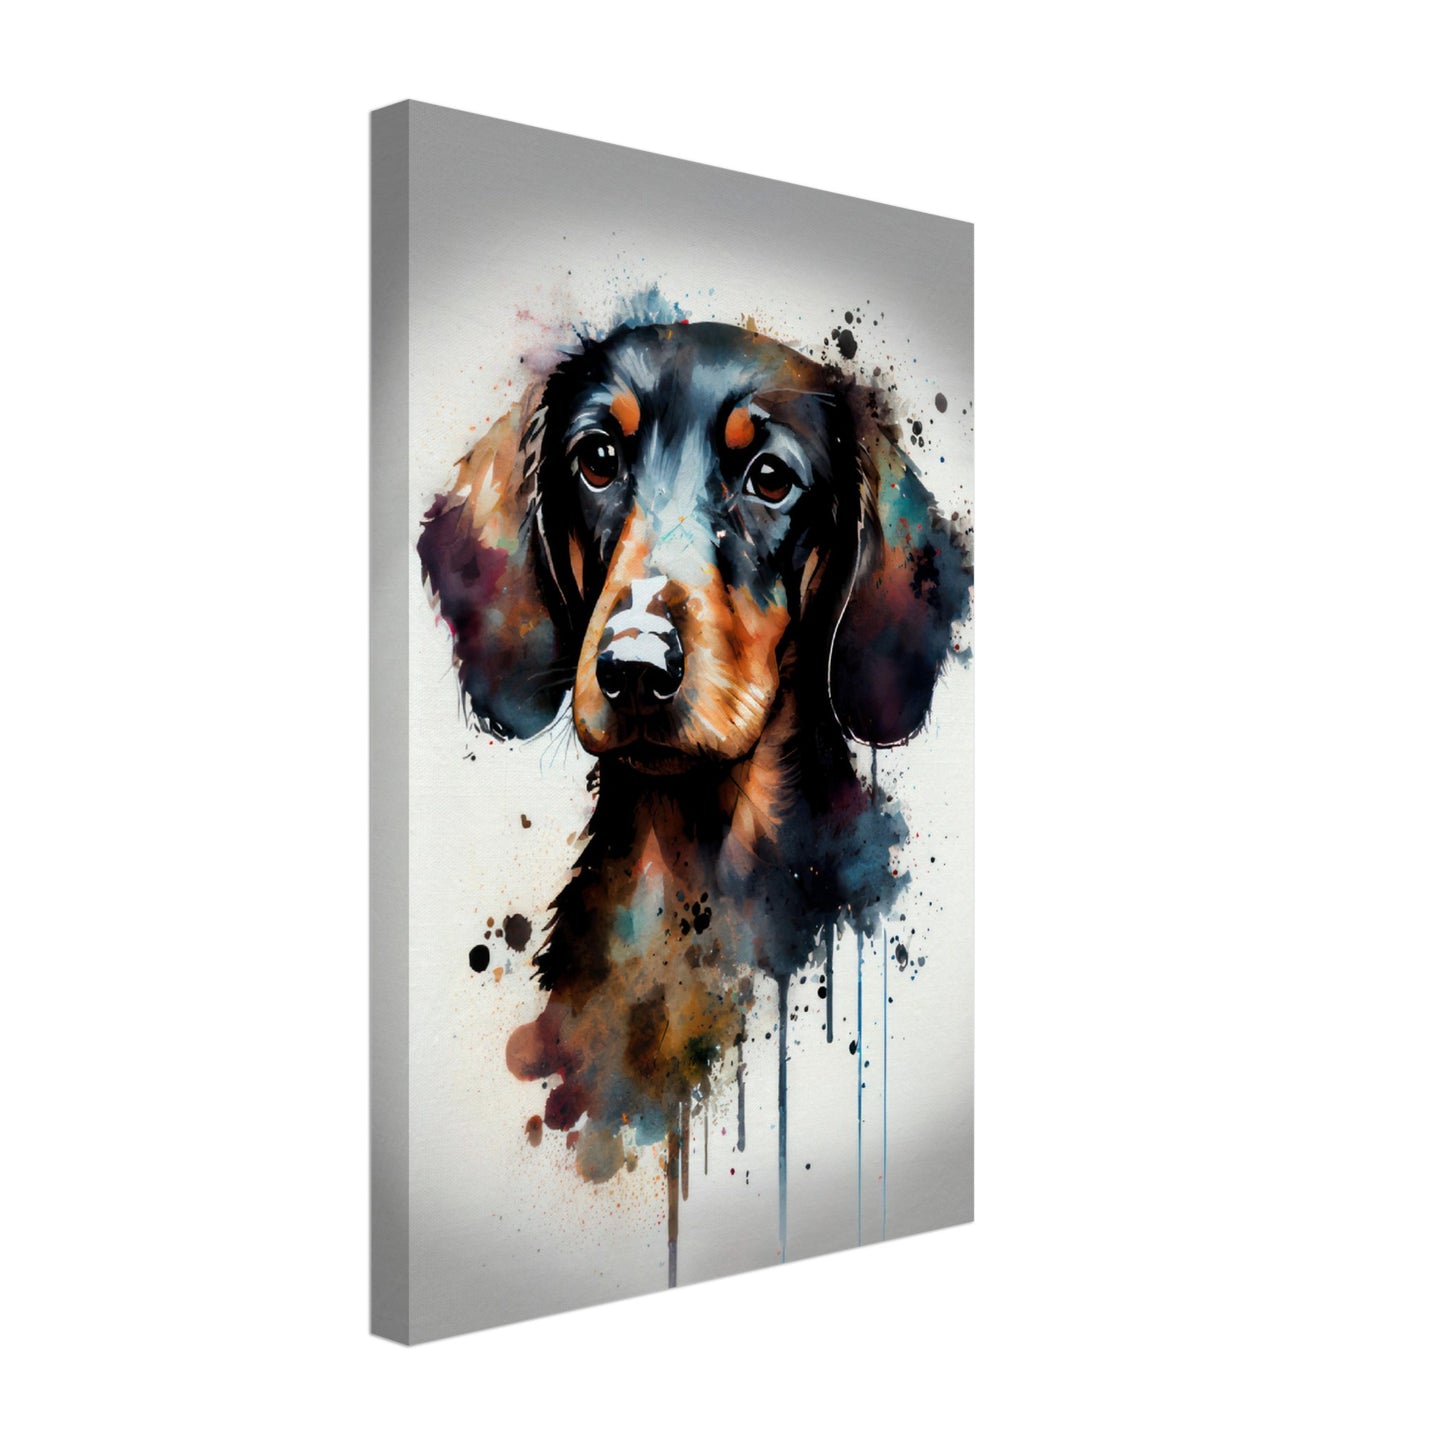 Dackel Teddy - Hunde Wandbild - Dogs Art Leinwand WaterColors im Hochformat - Hundebilder Hundeportrait Tiere Tierbilder Kunstdruck Aquarell